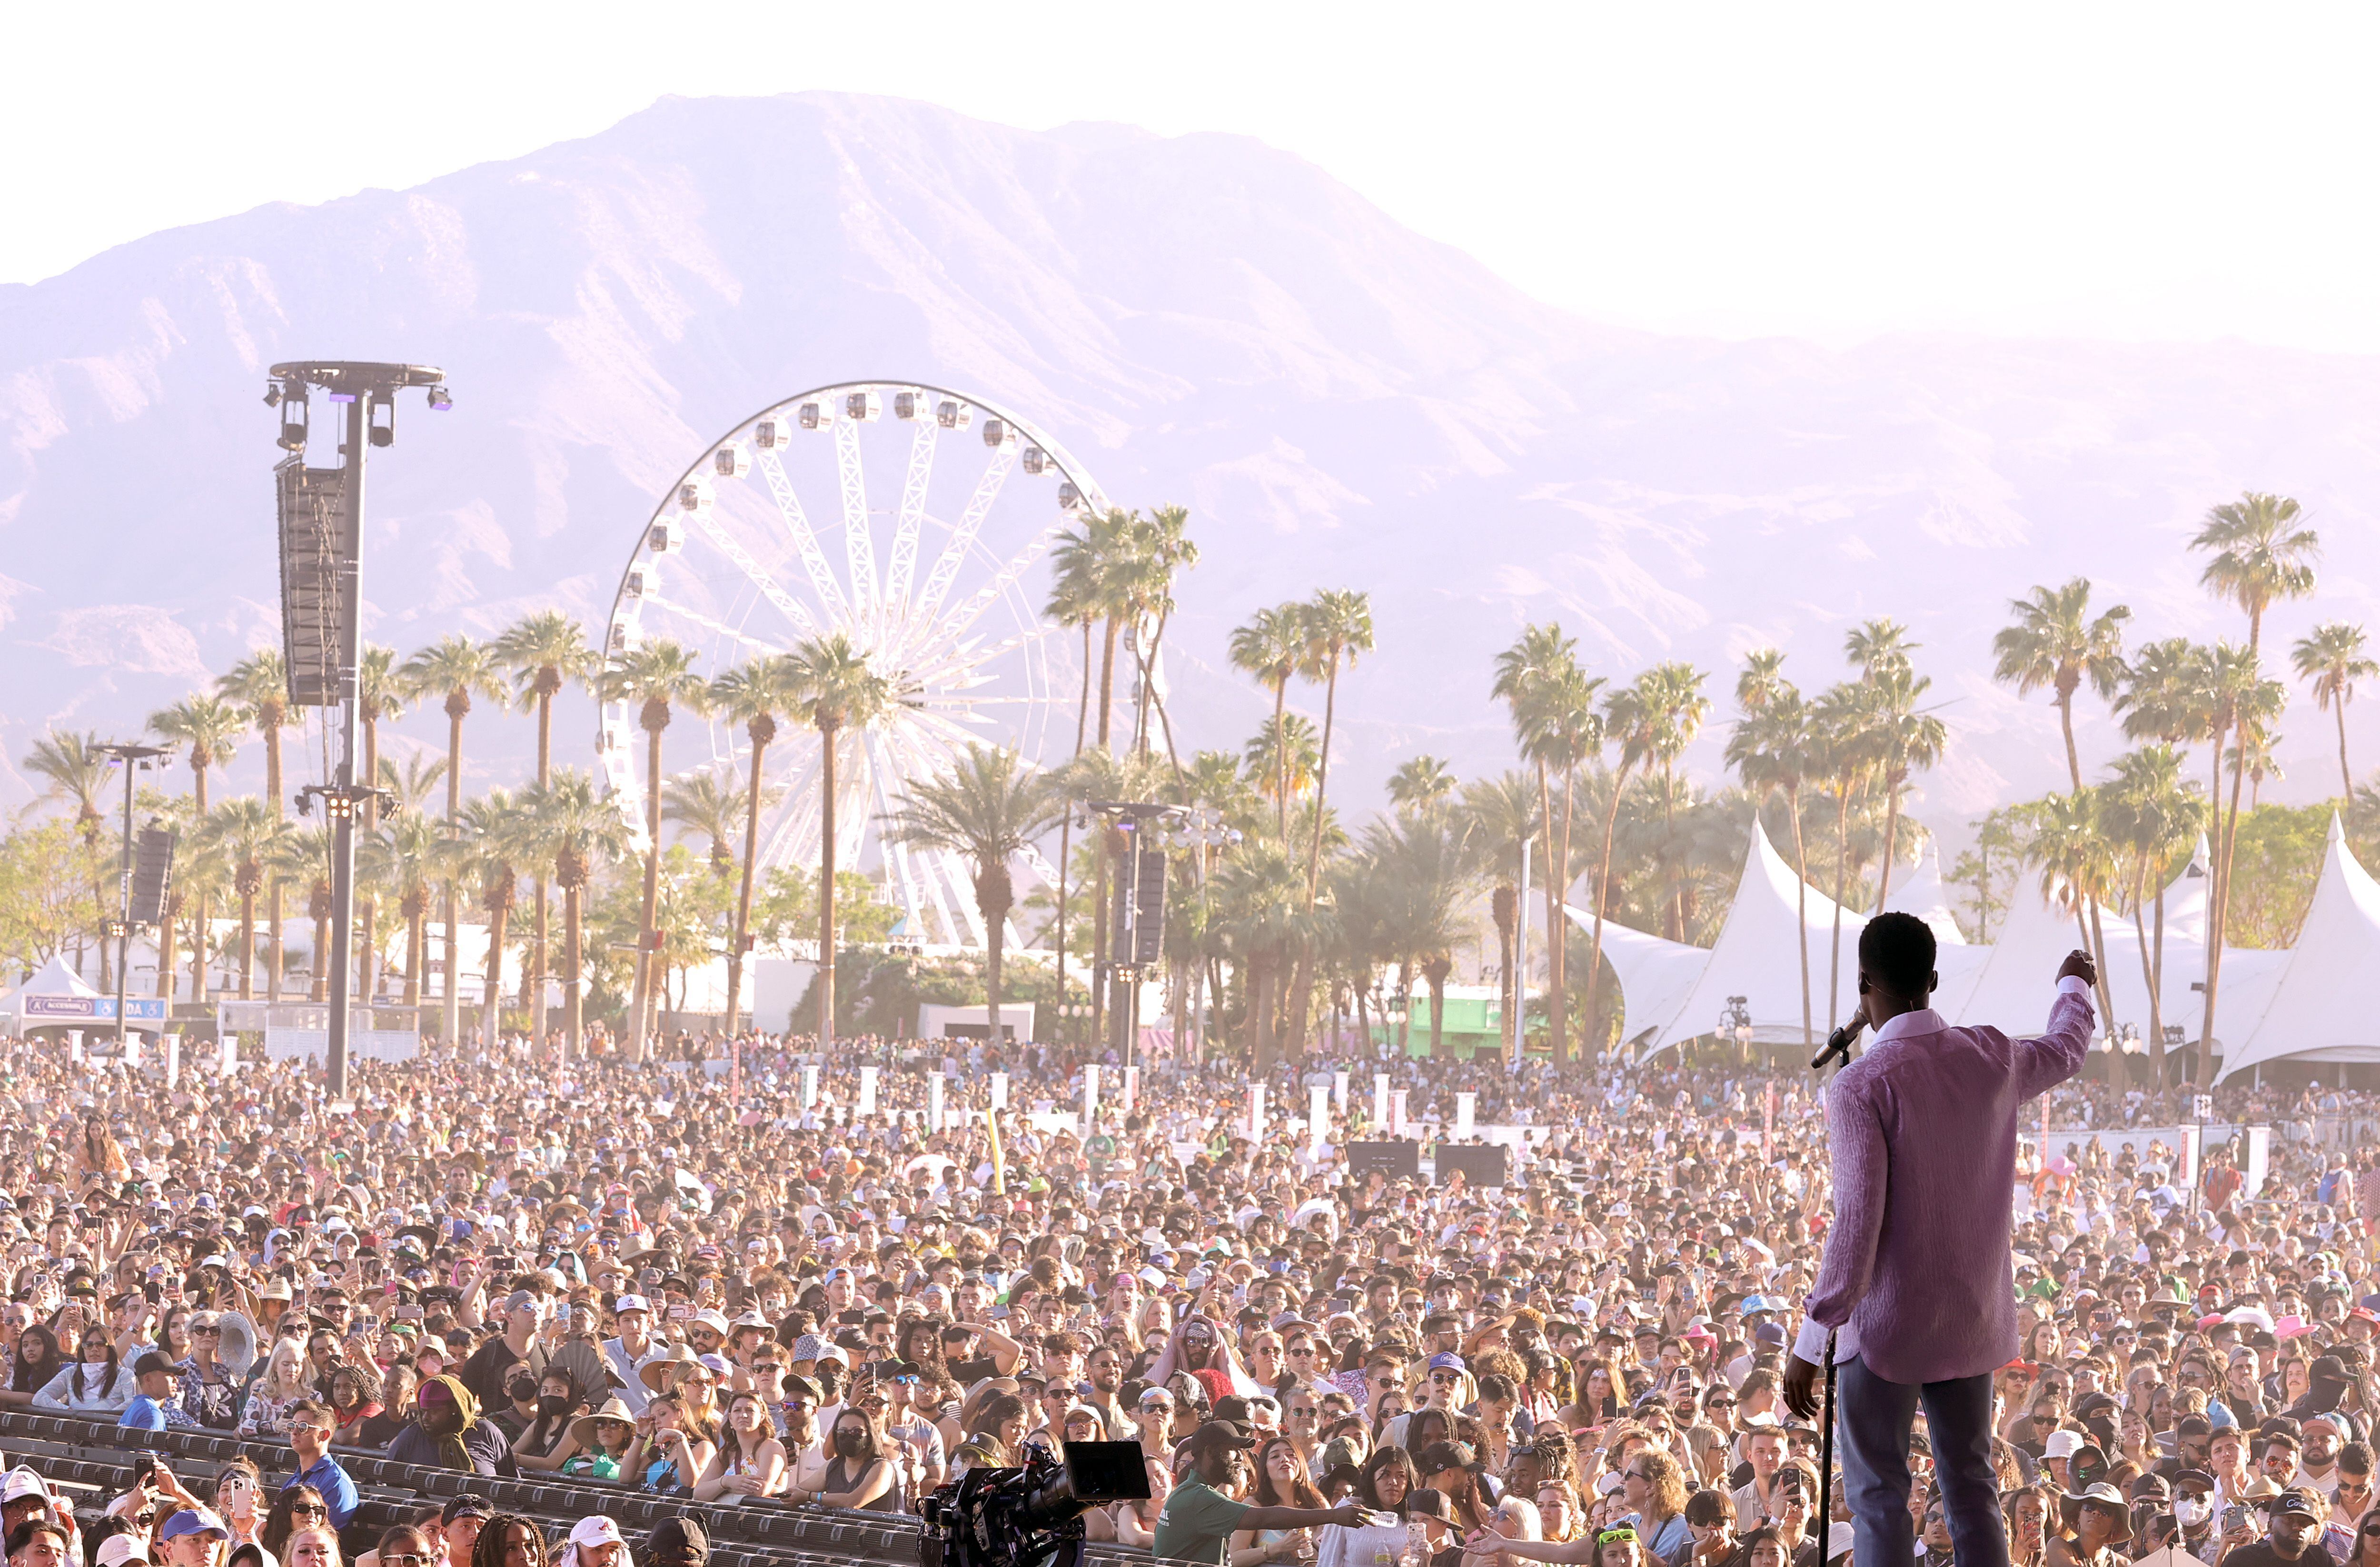 Festival atmosphere at last year's Coachella.